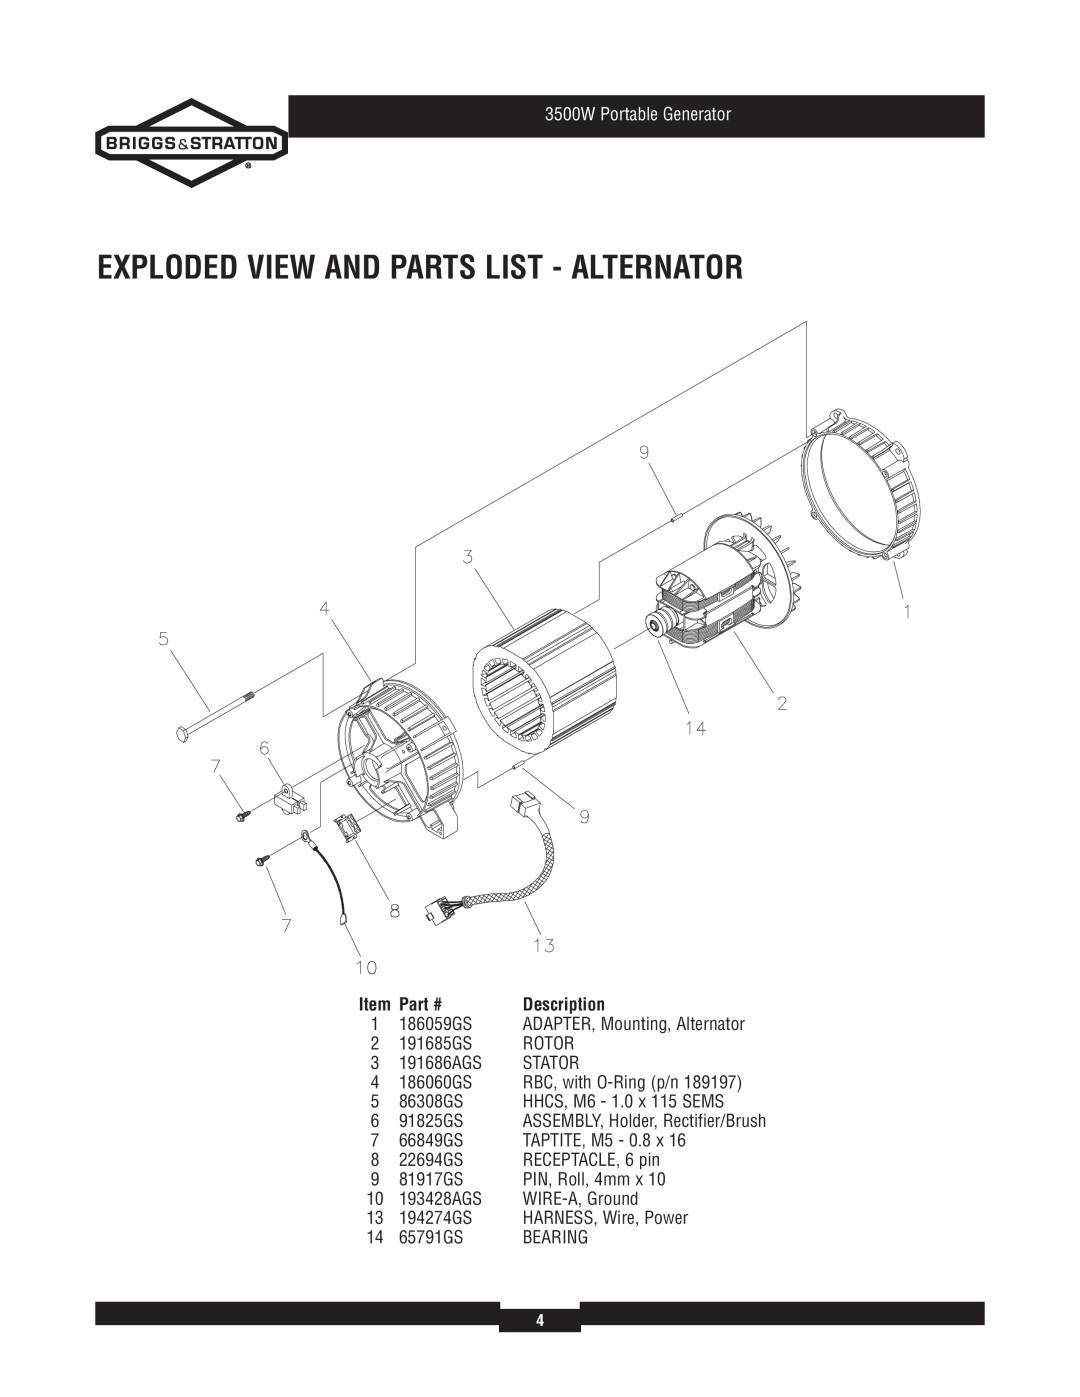 Briggs & Stratton 030208-2 manual Exploded View And Parts List - Alternator, 3500W Portable Generator, Description 